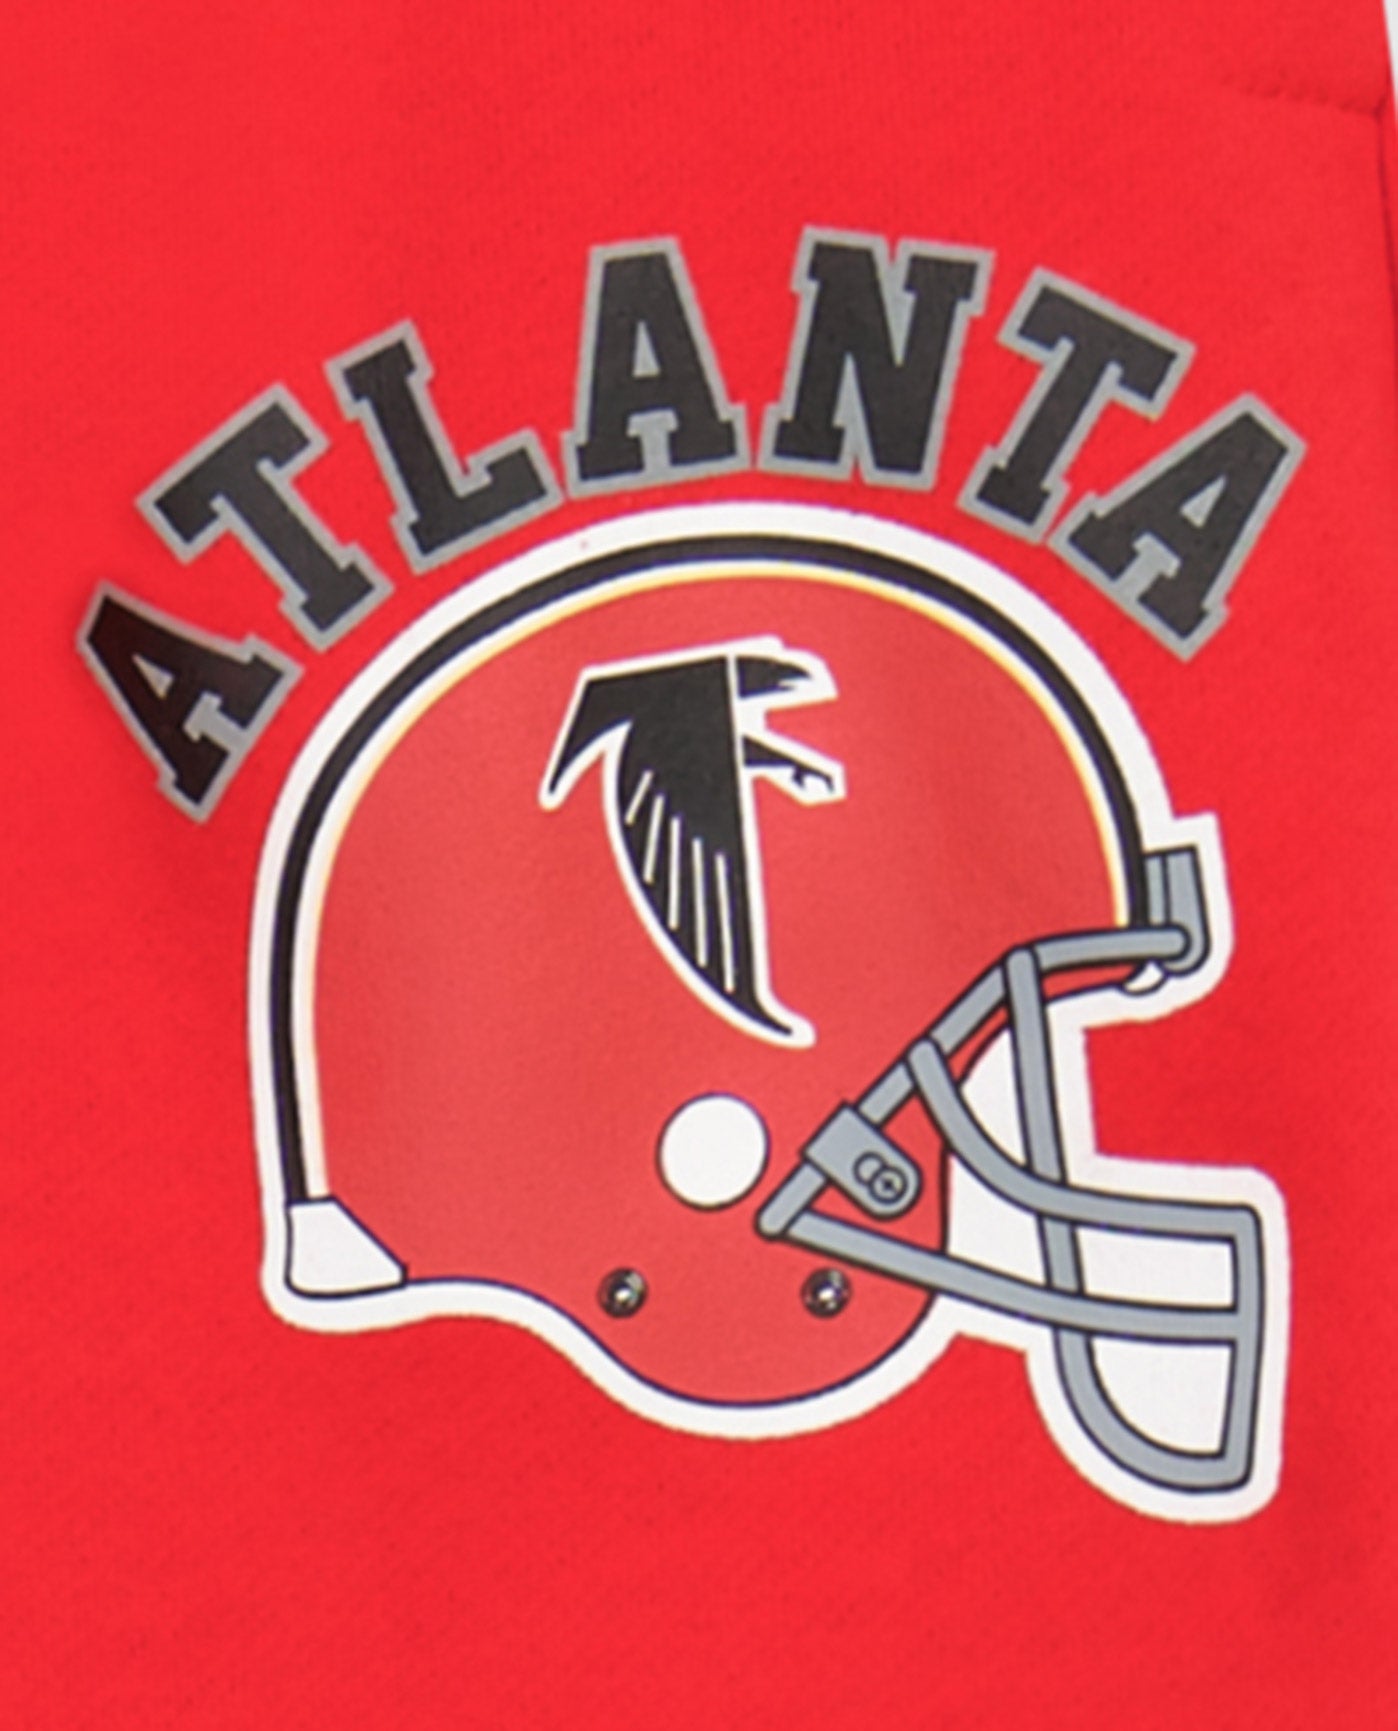 ATLANTA FALCONS writing and helmet logo front | Falcons Red